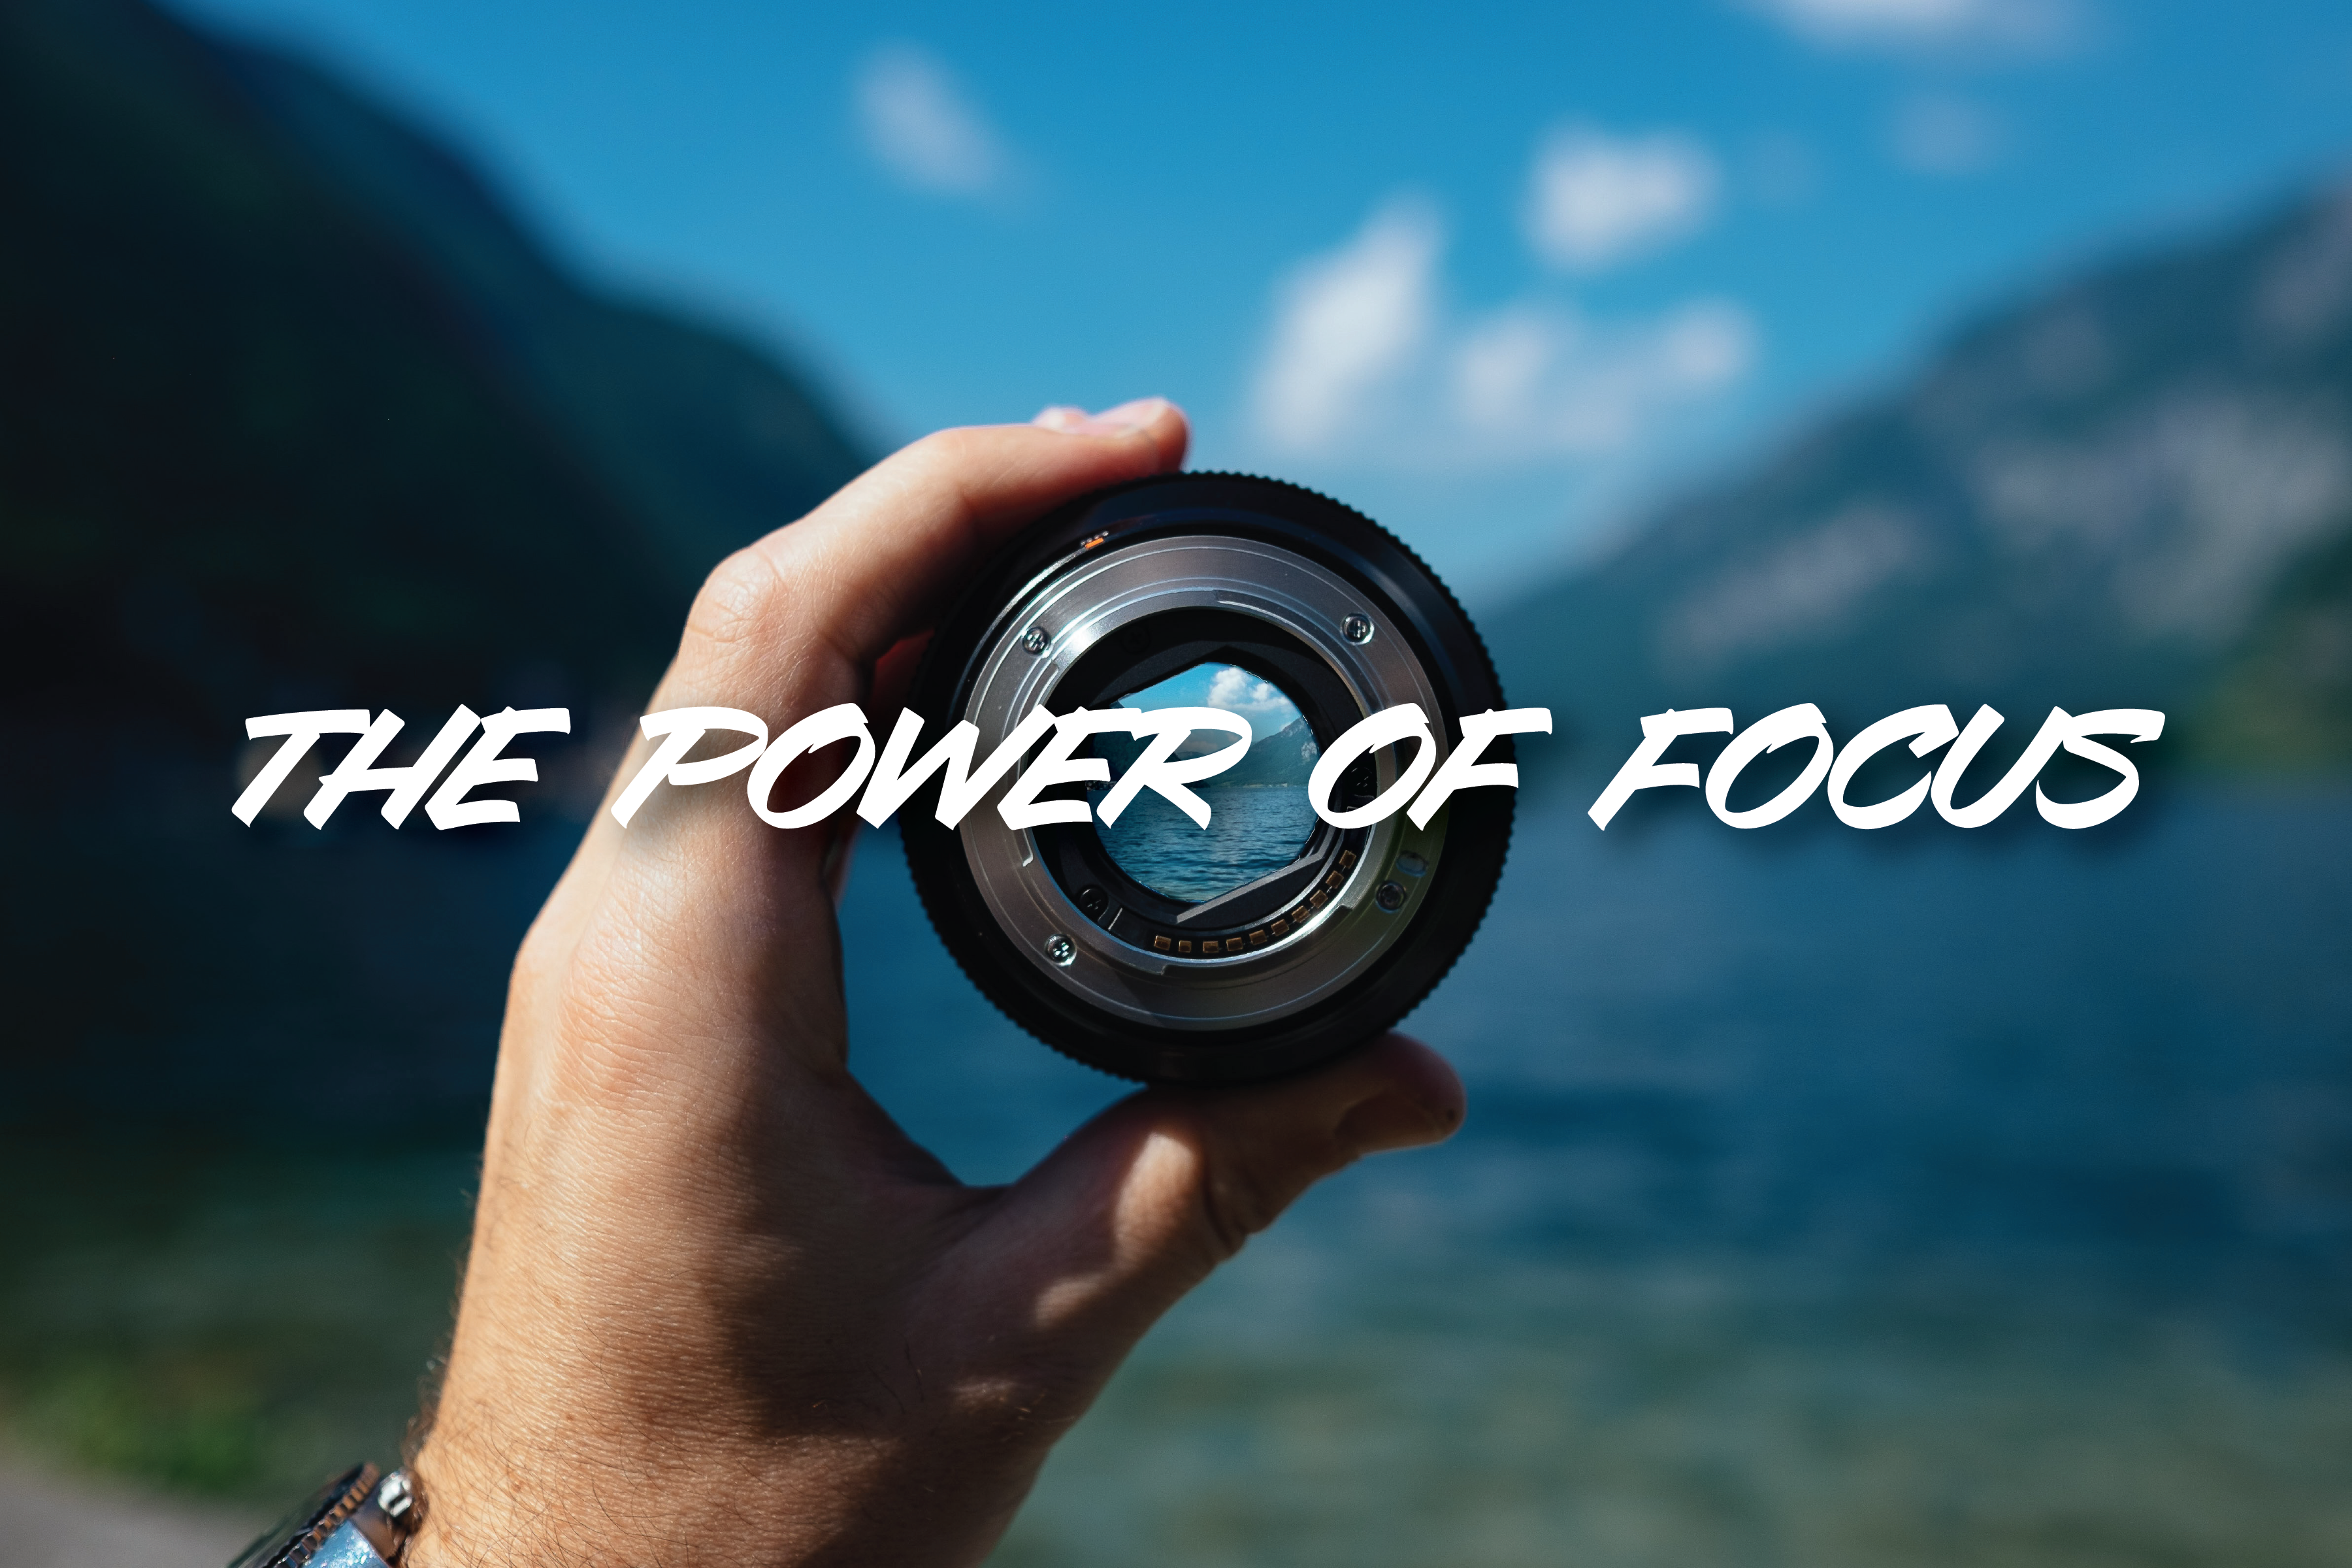 power of focus